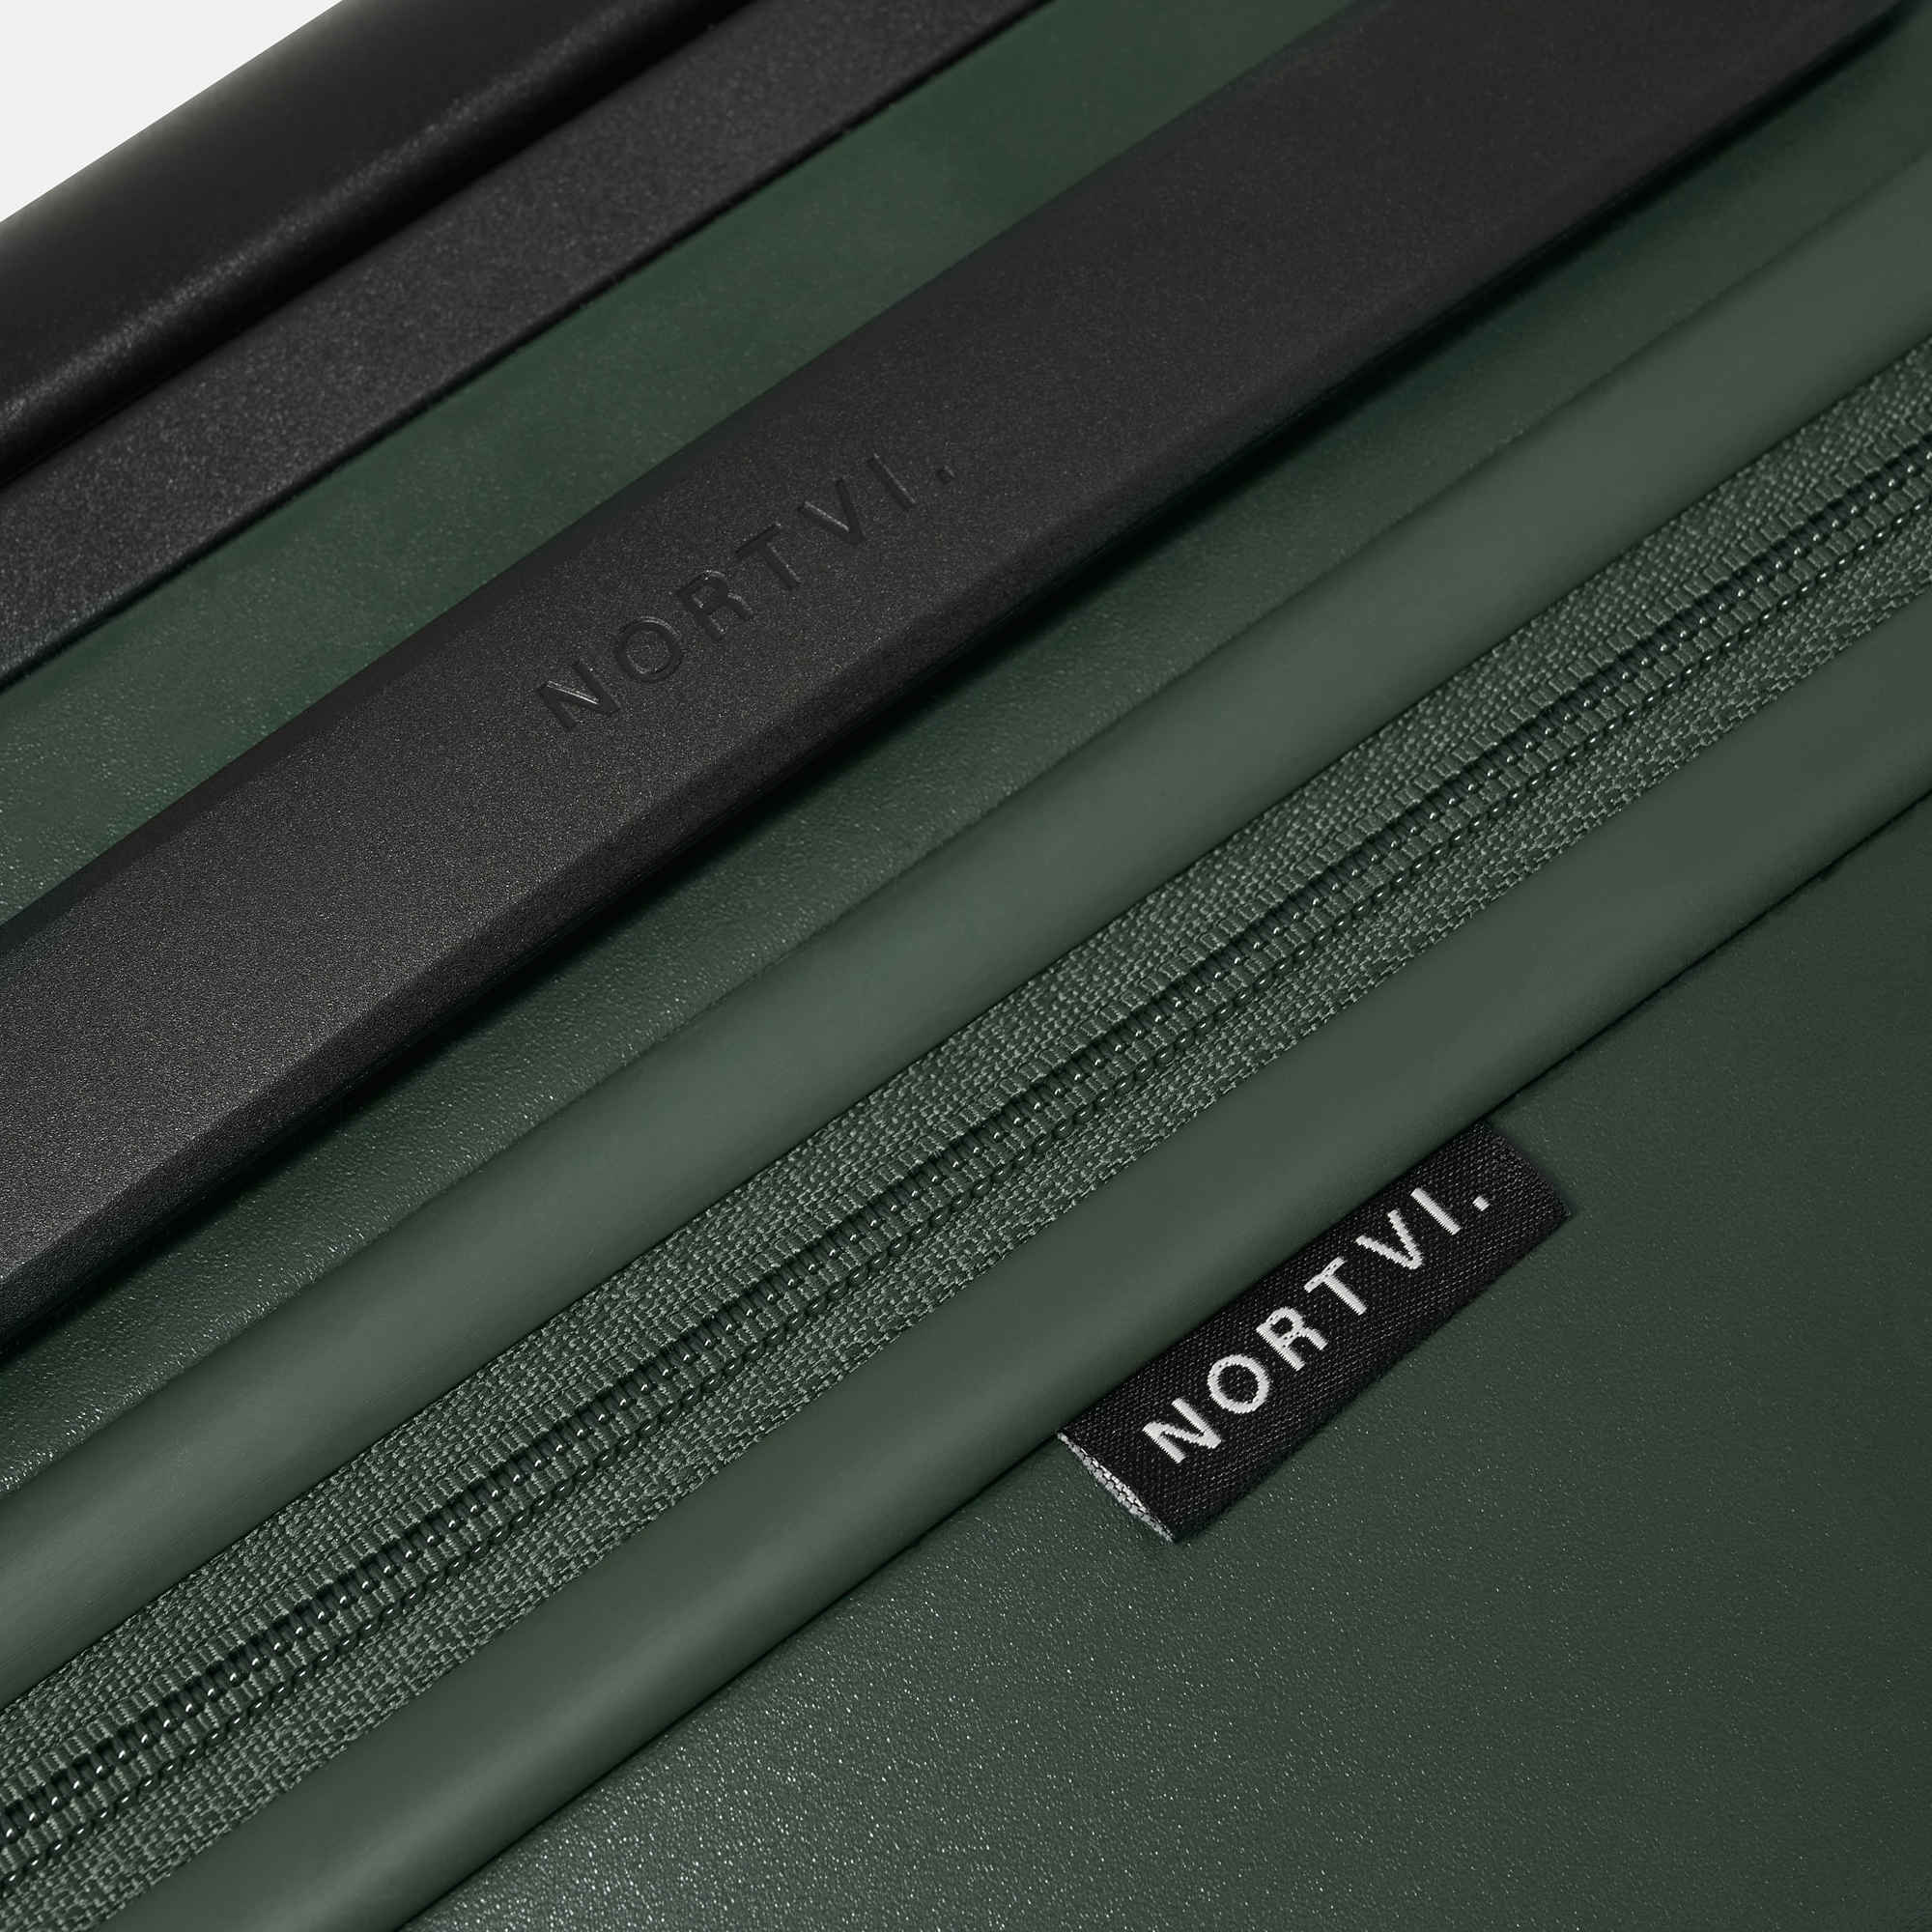 Nortvi Handgepäckkoffer Dunkelgrün nachhaltig